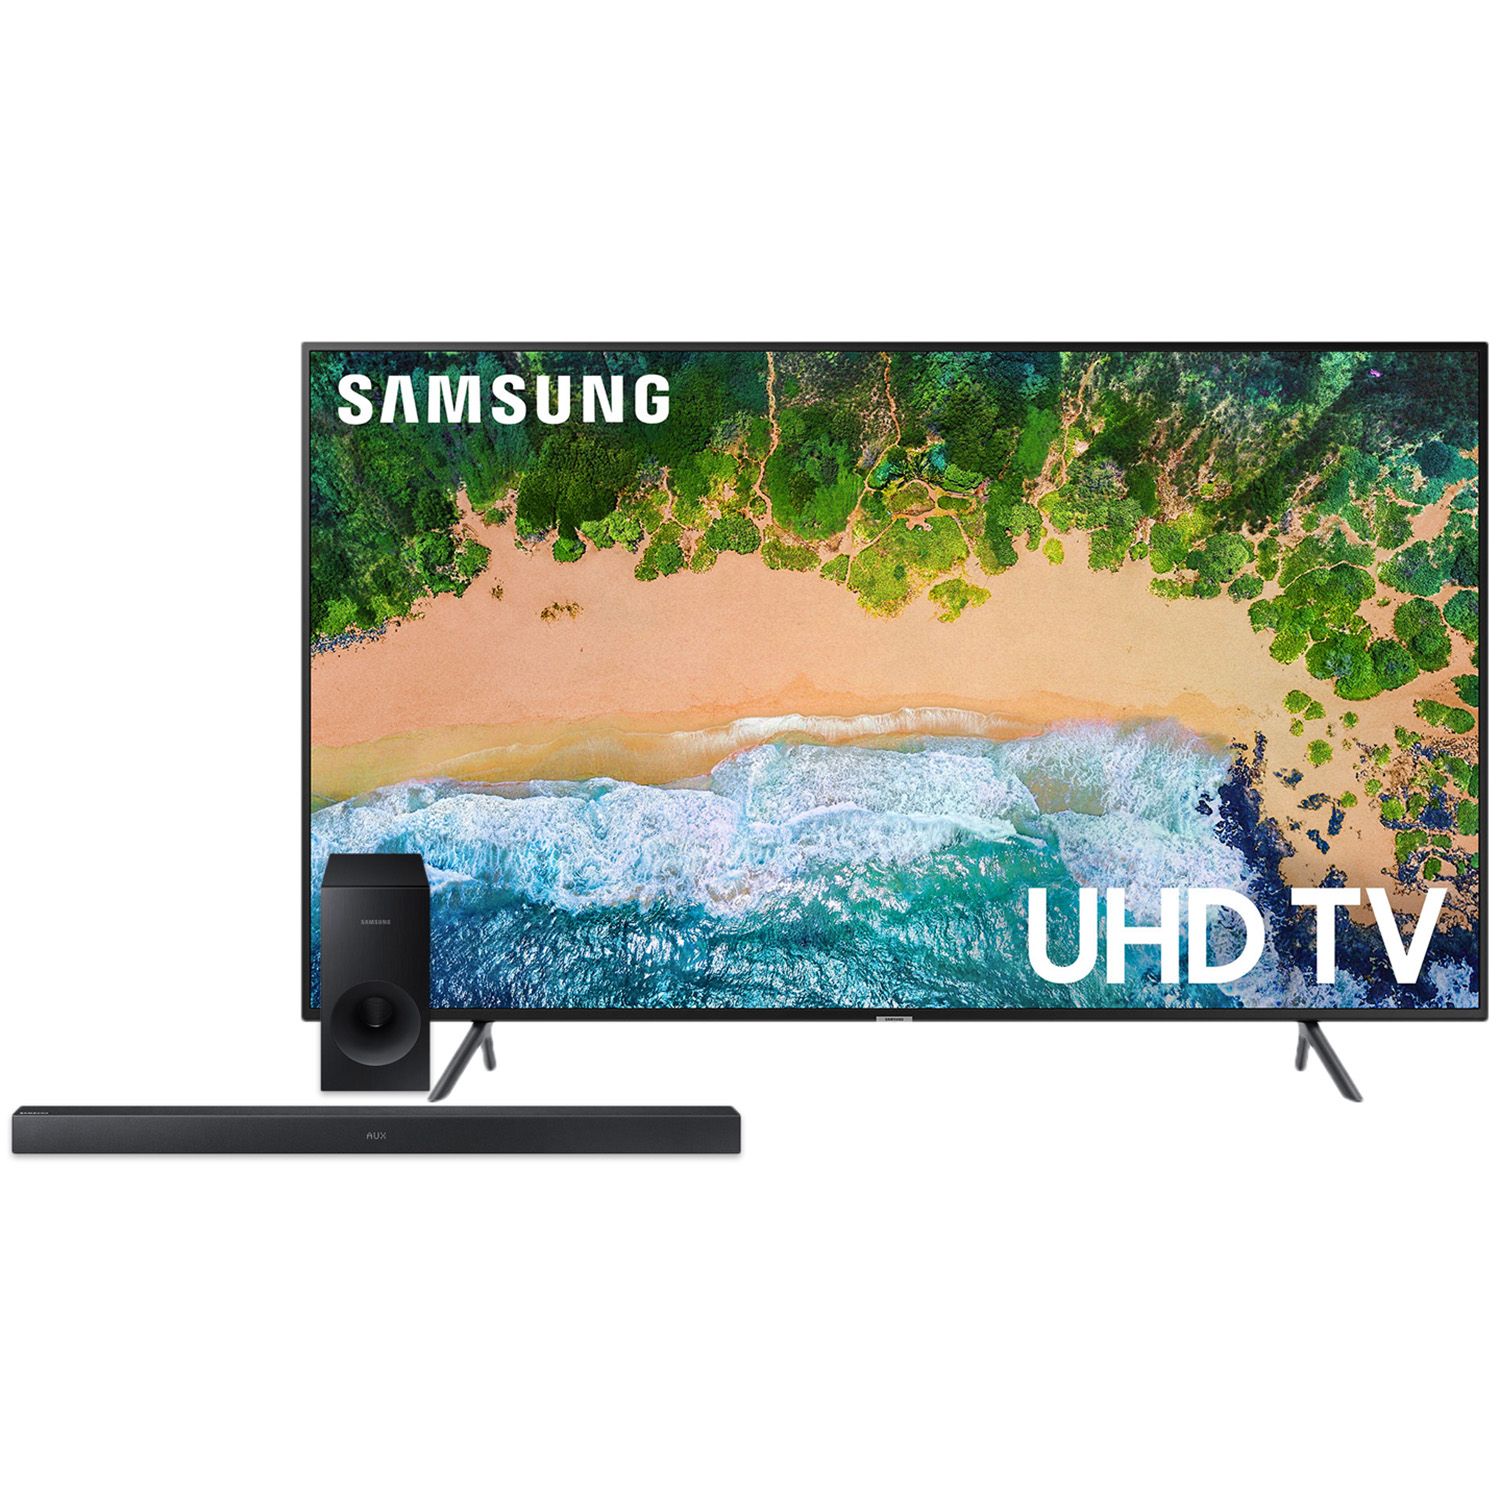 SAMSUNG UN58NU710 58″ 4K Ultra HD Smart LED TV + Samsung HW-K369/ZA 2.1 Channel Soundbar System with Wireless Subwoofer